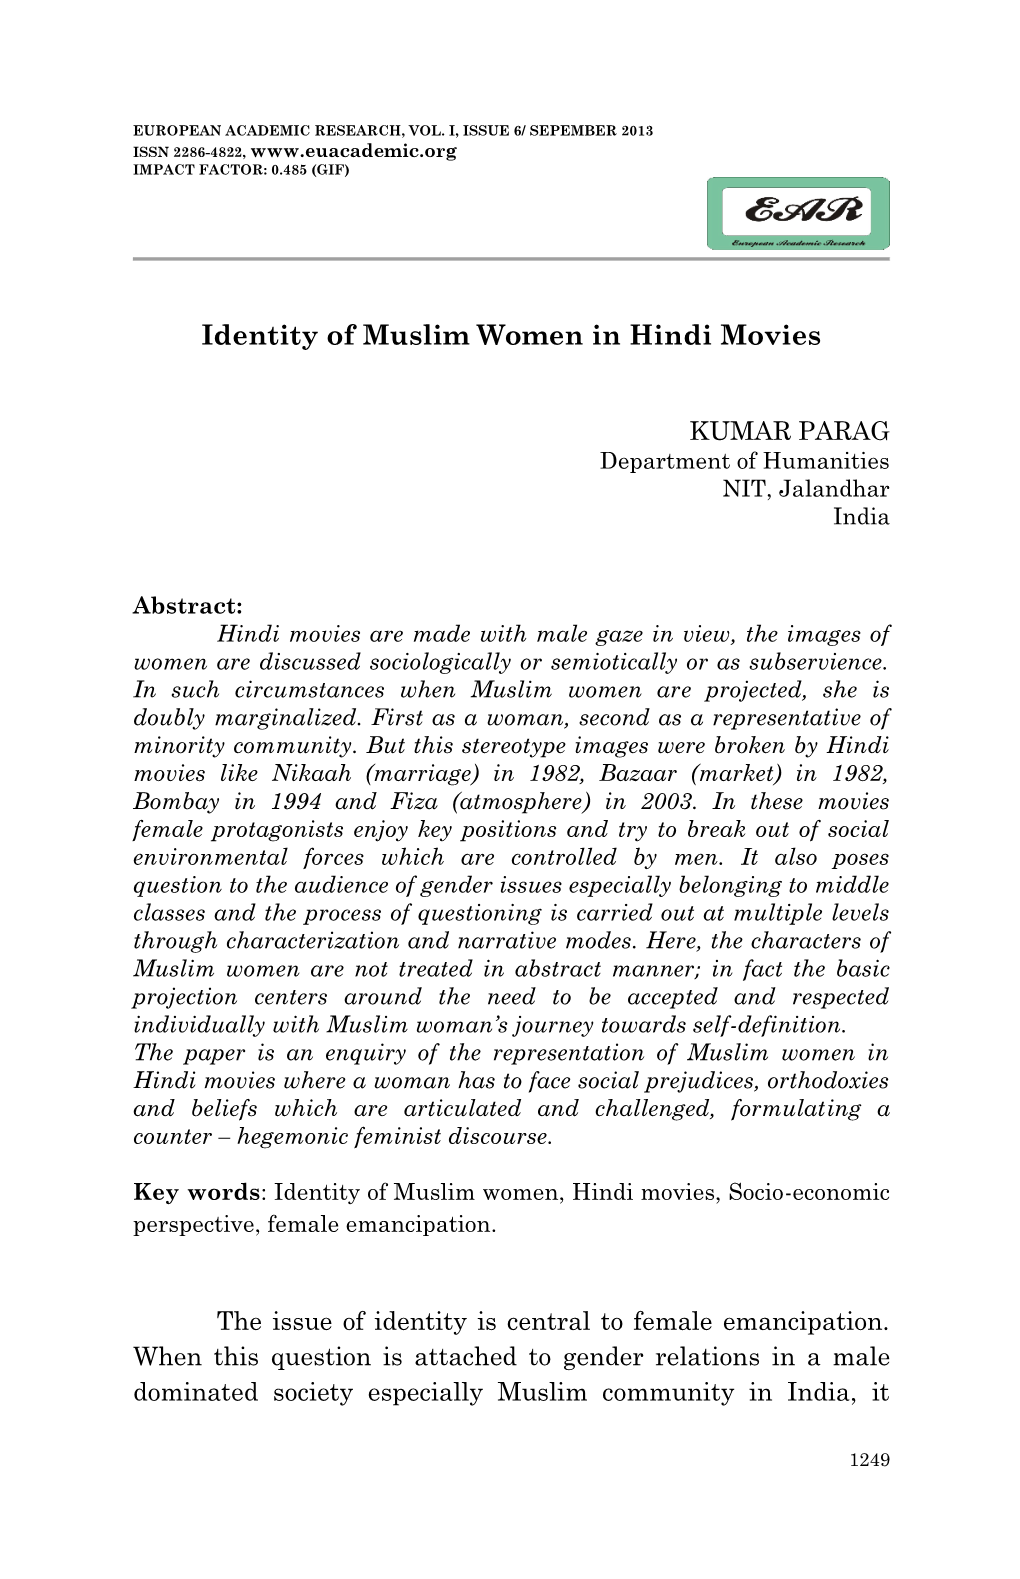 Identity of Muslim Women in Hindi Movies